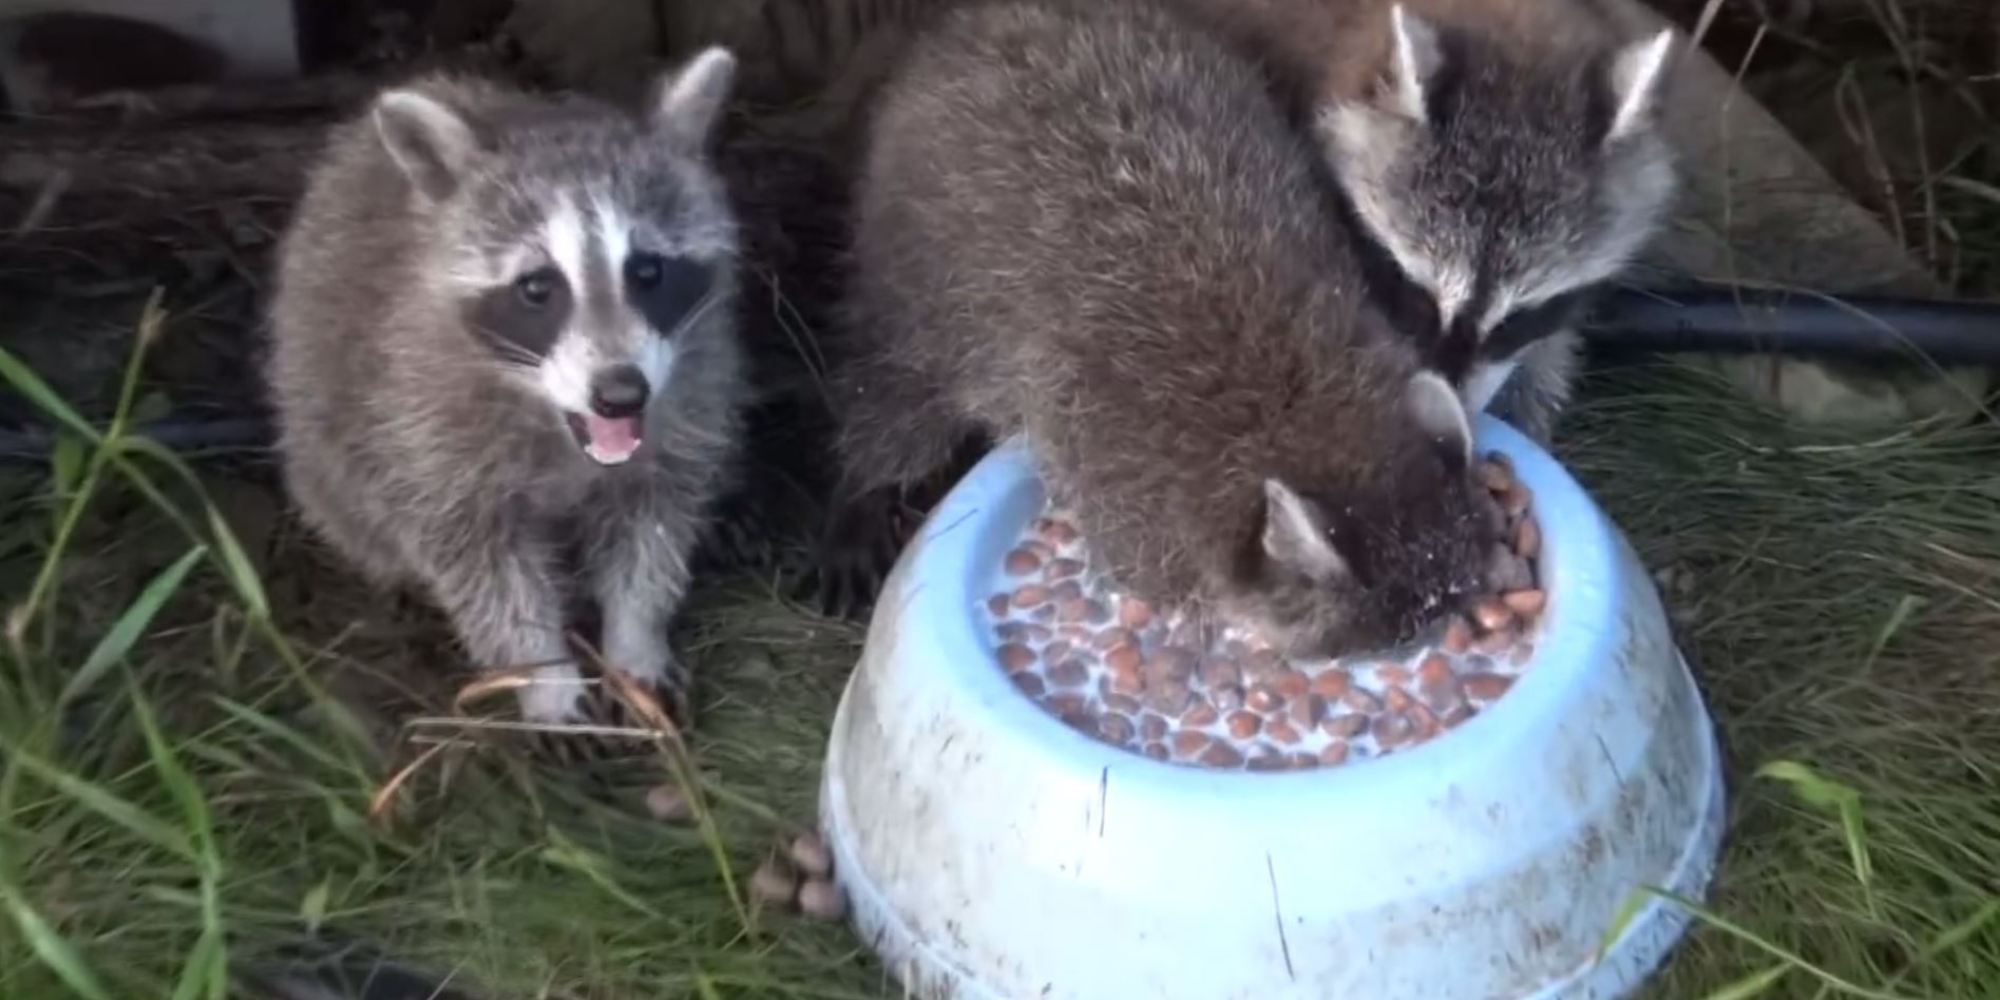 What eats raccoons?